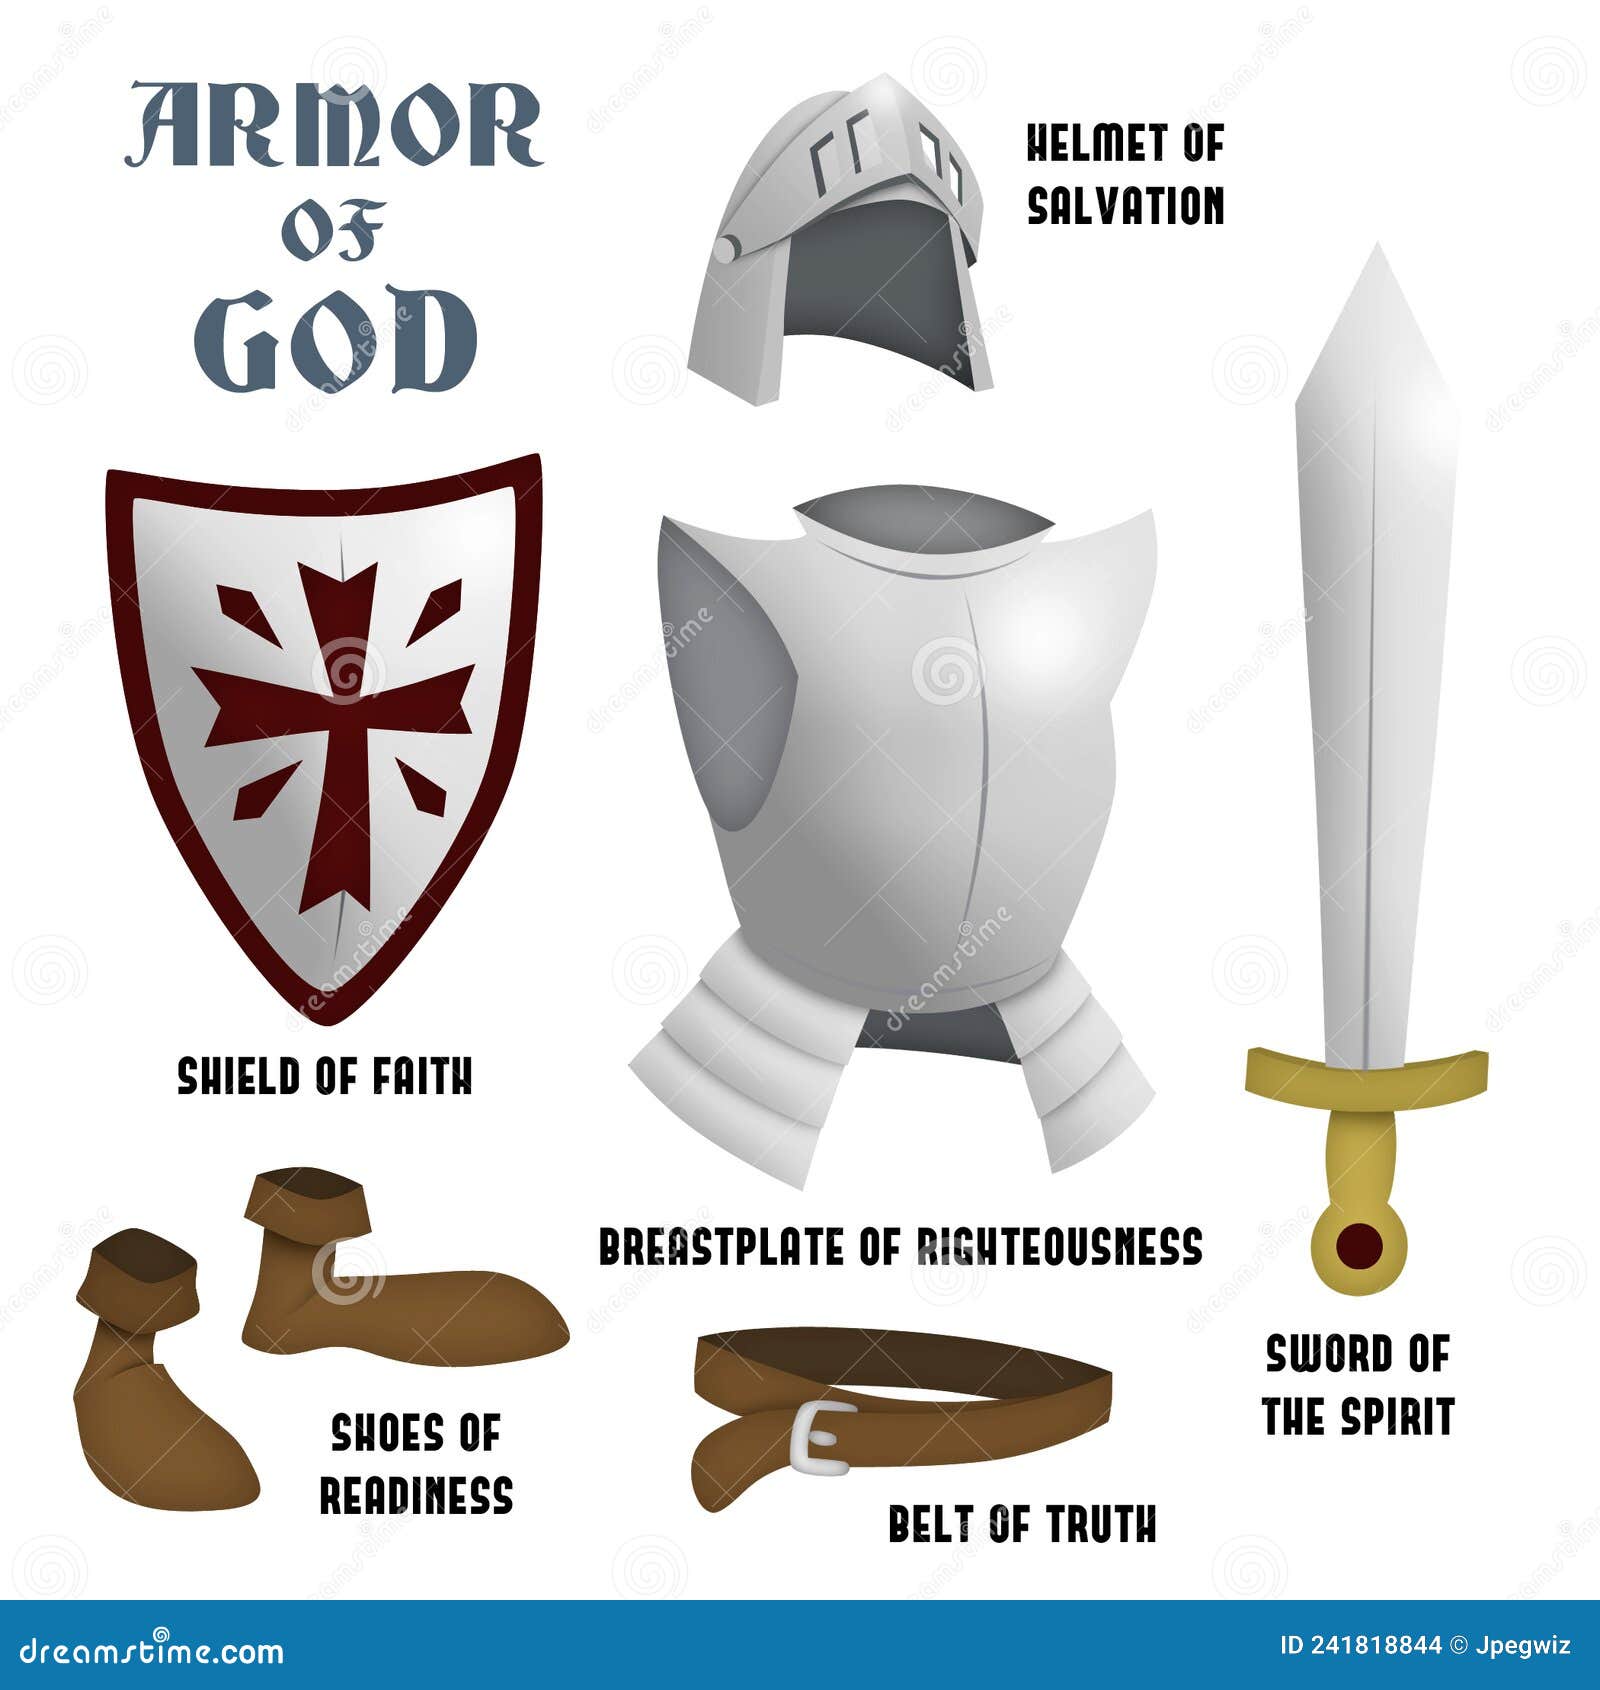 armor of god 